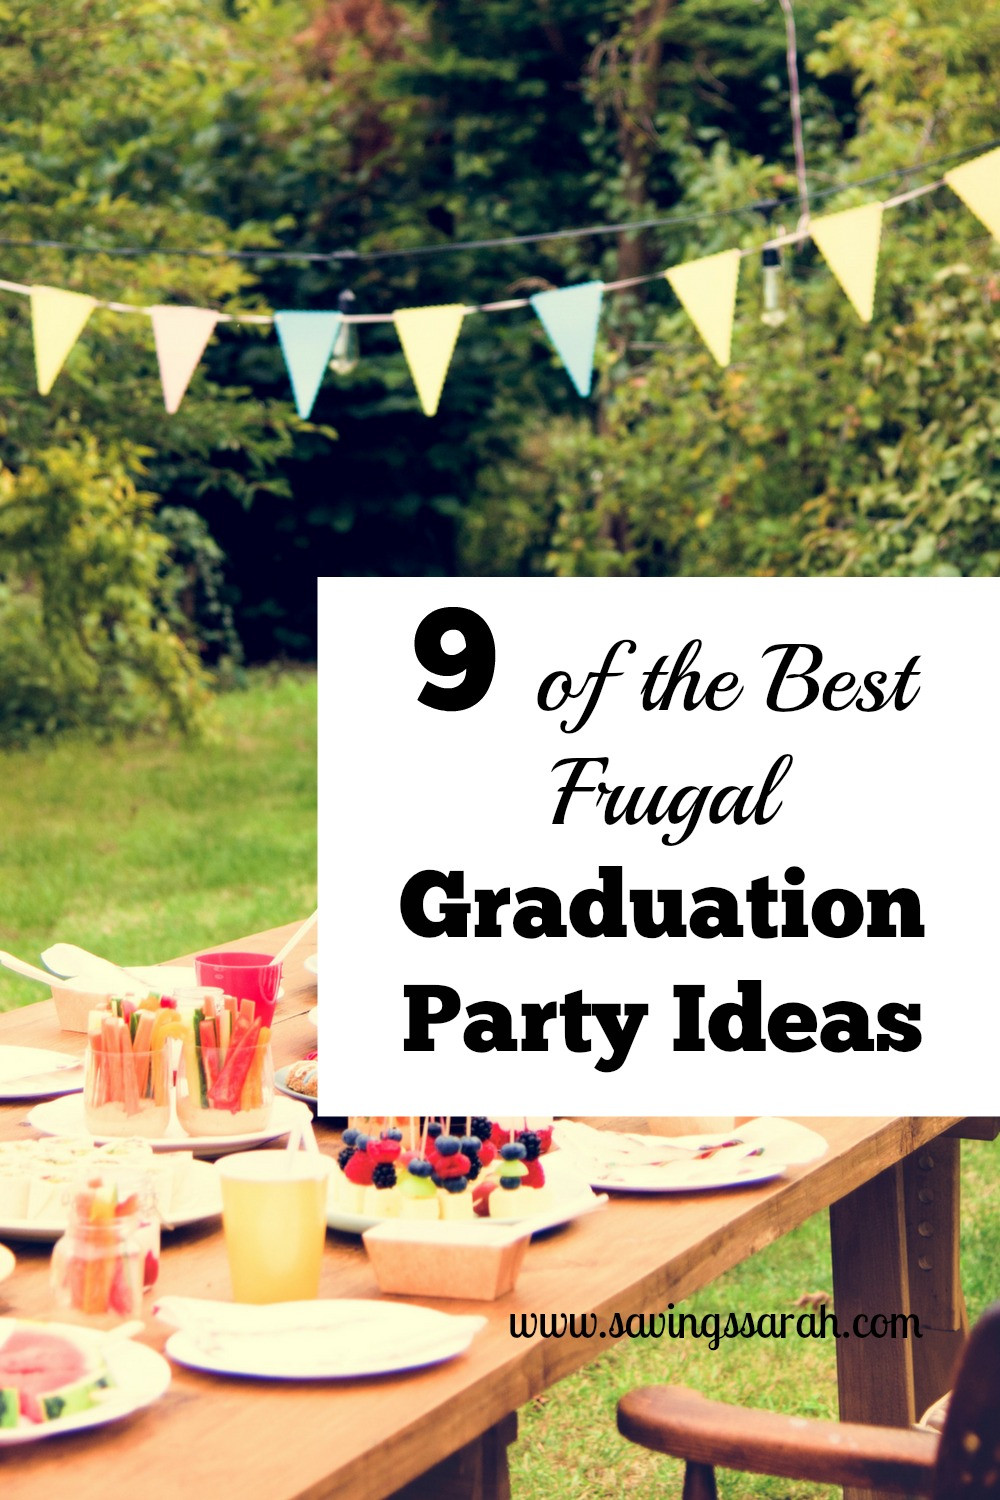 Graduation Garden Party Ideas
 9 the Best Frugal Graduation Party Ideas Earning and